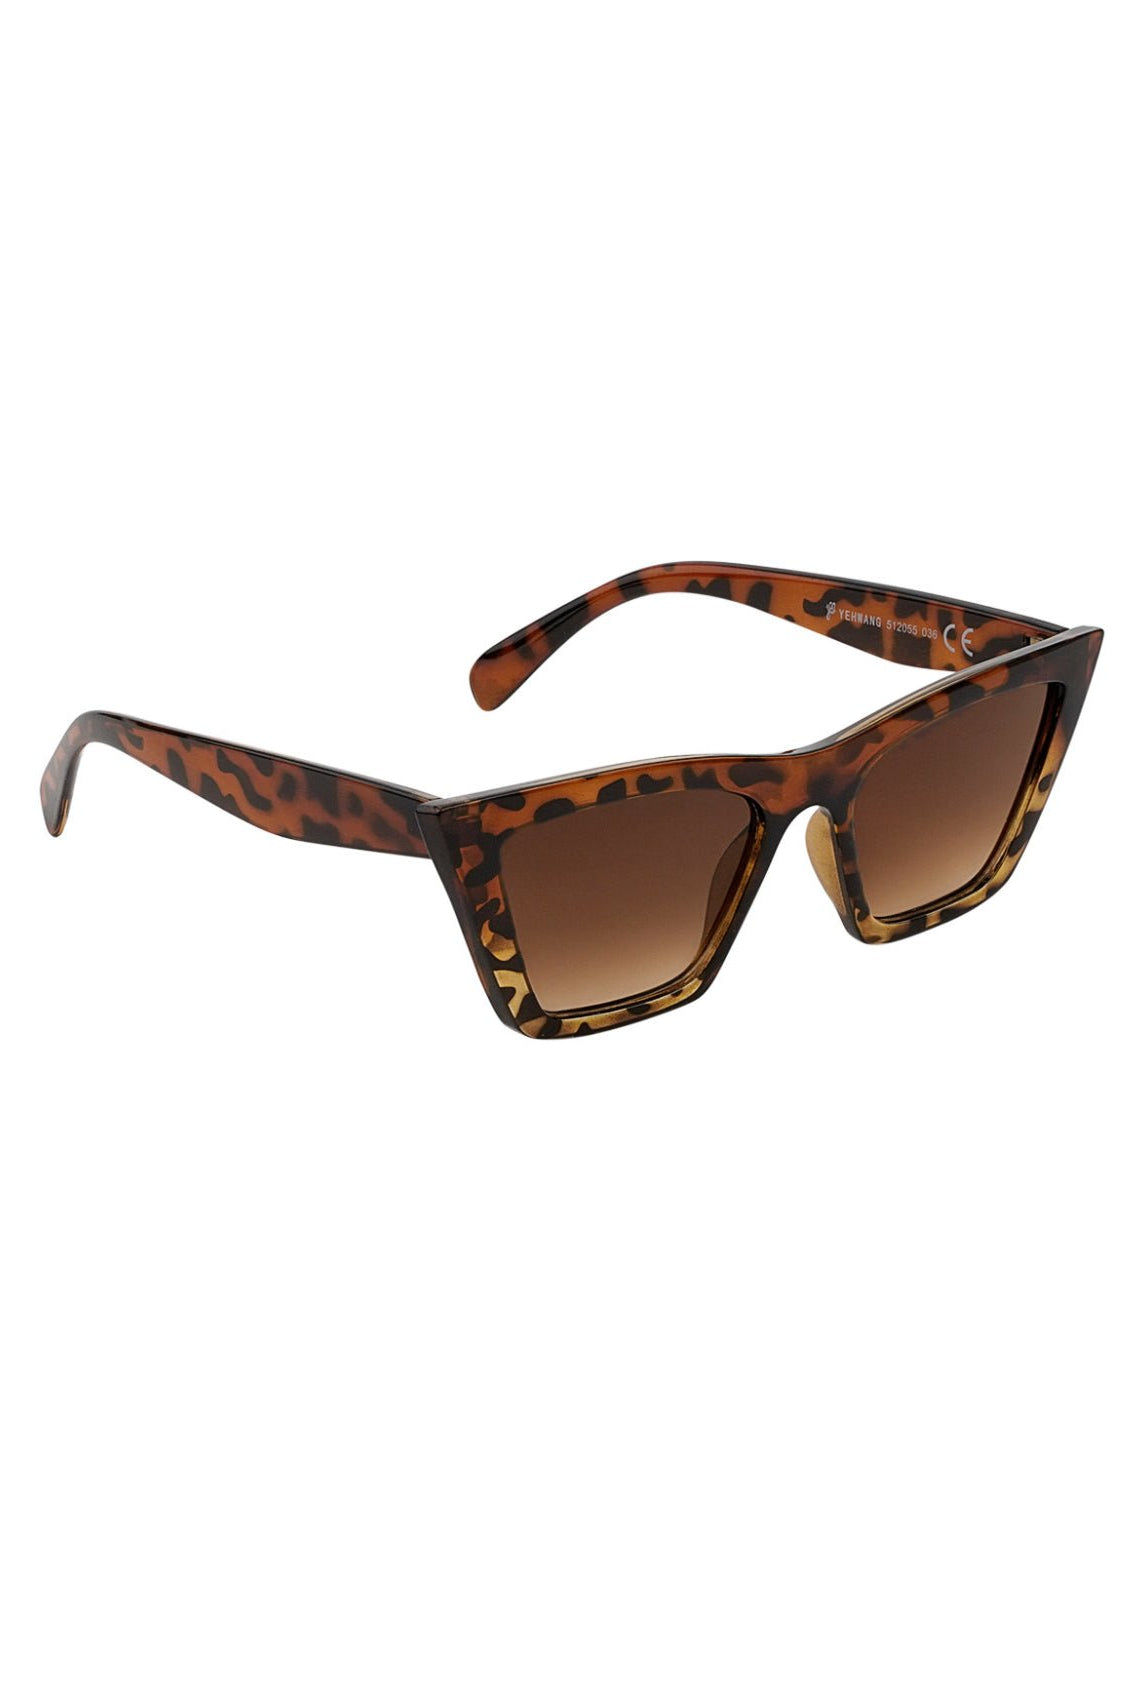 Cat eye brown sunglasses -